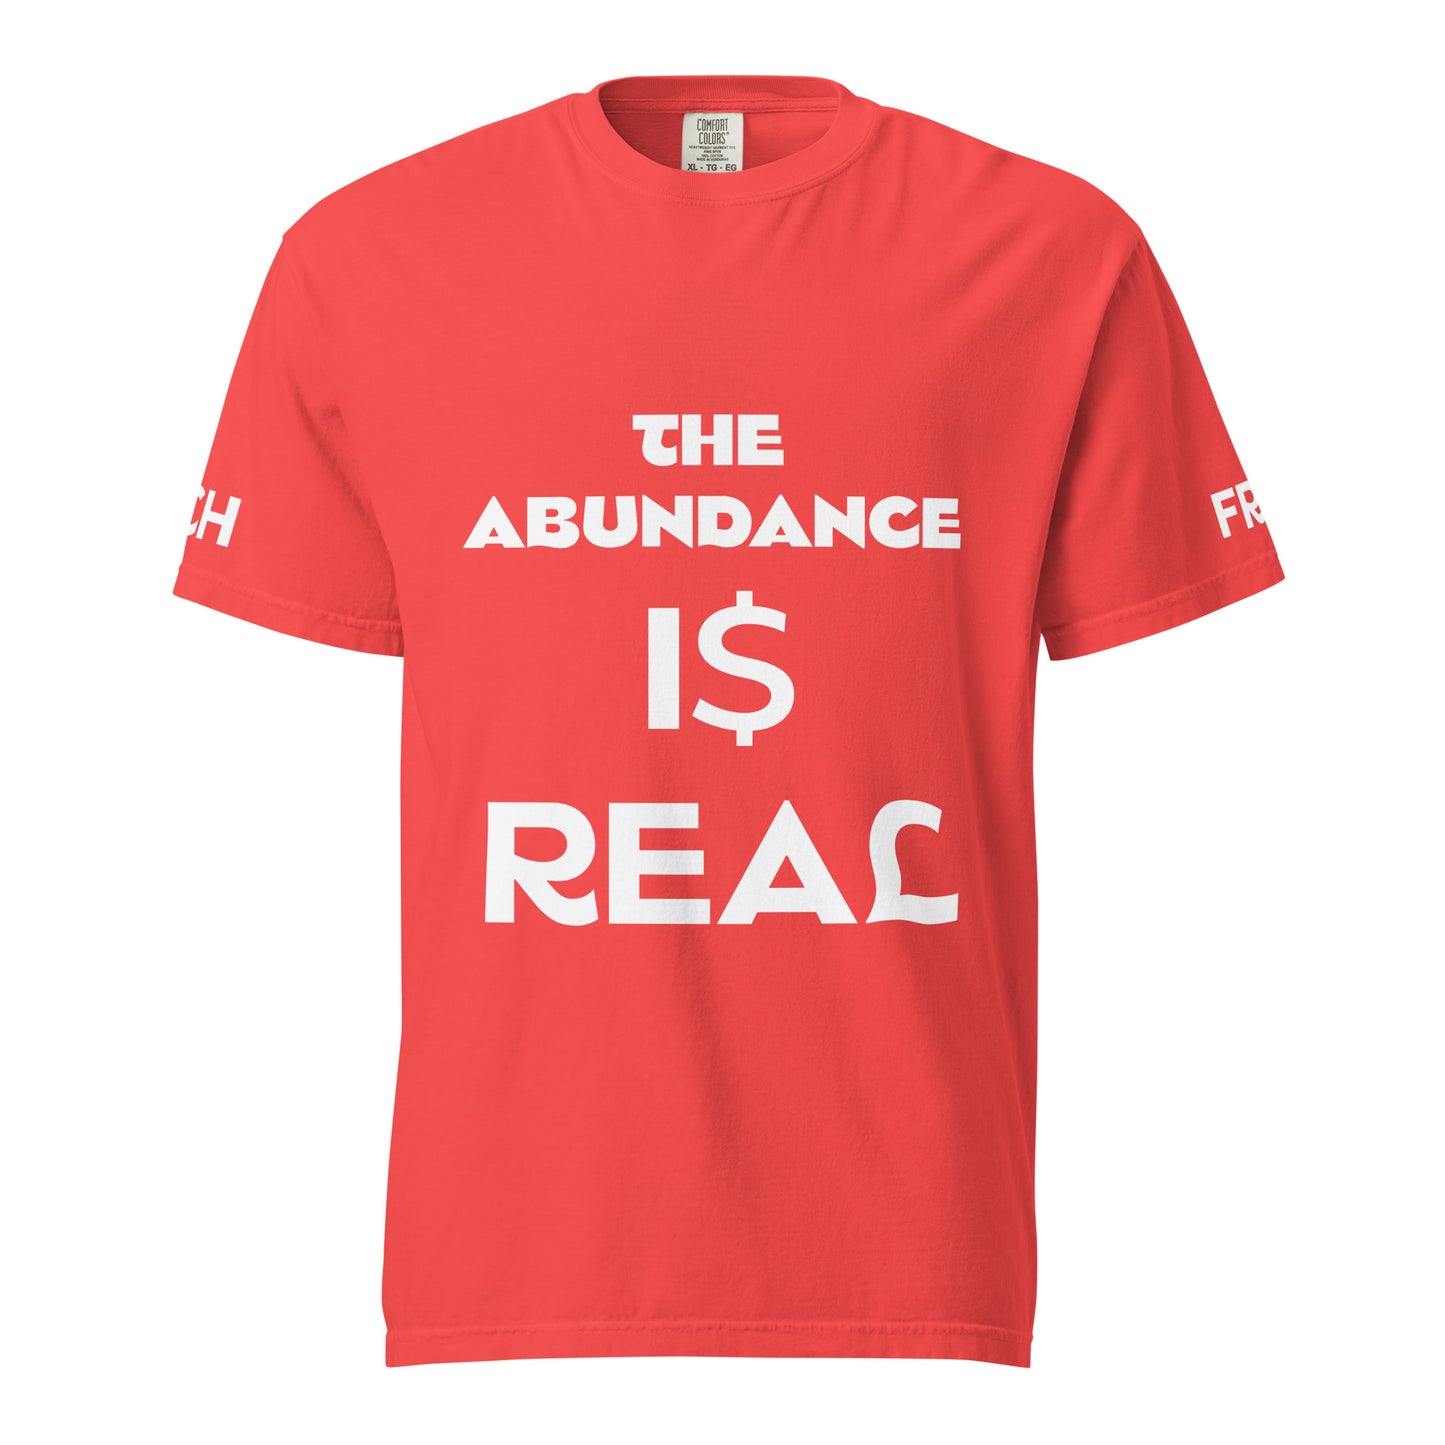 The Abundance I$ REAL T-Shirt